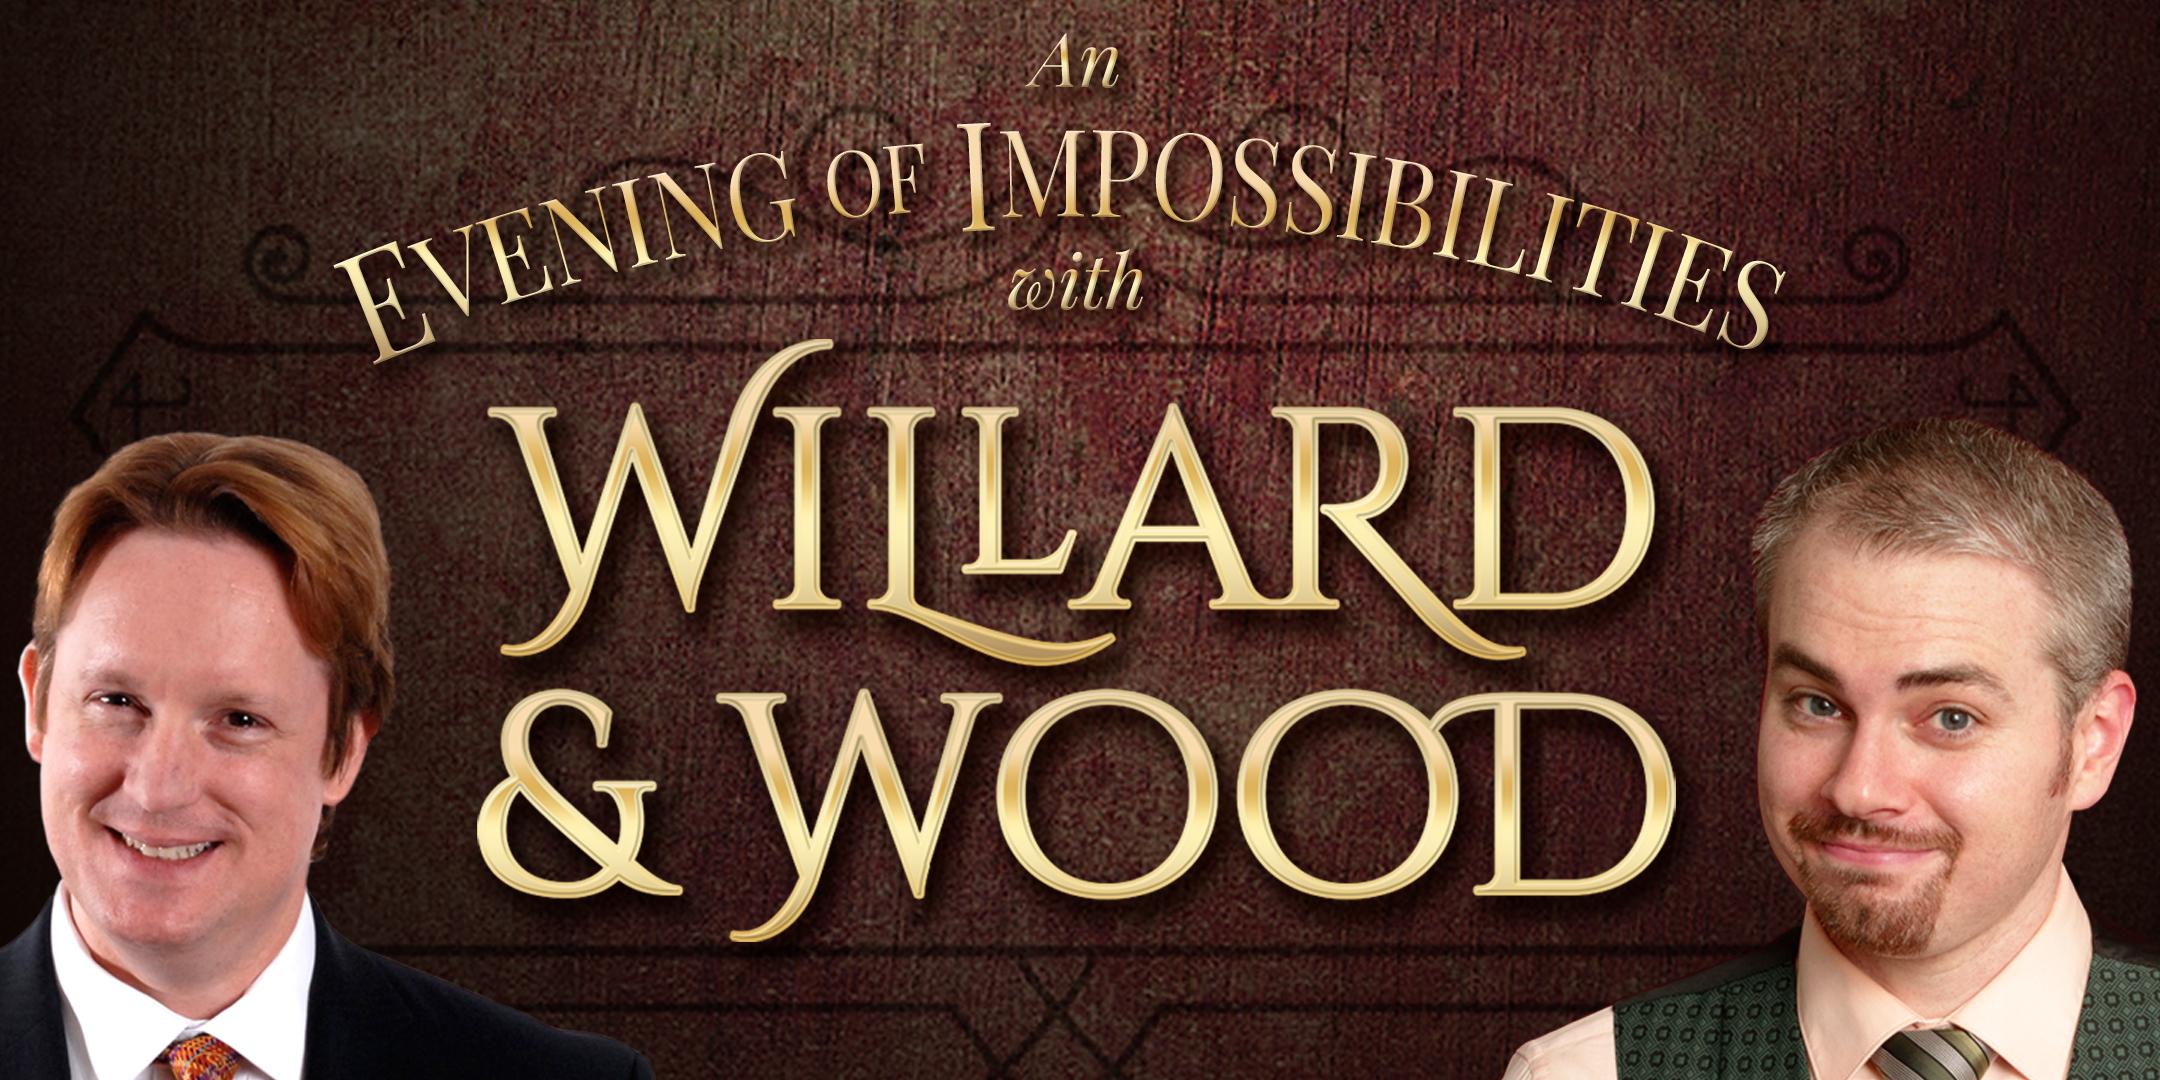 Willard & Wood: An Evening of Impossibilities